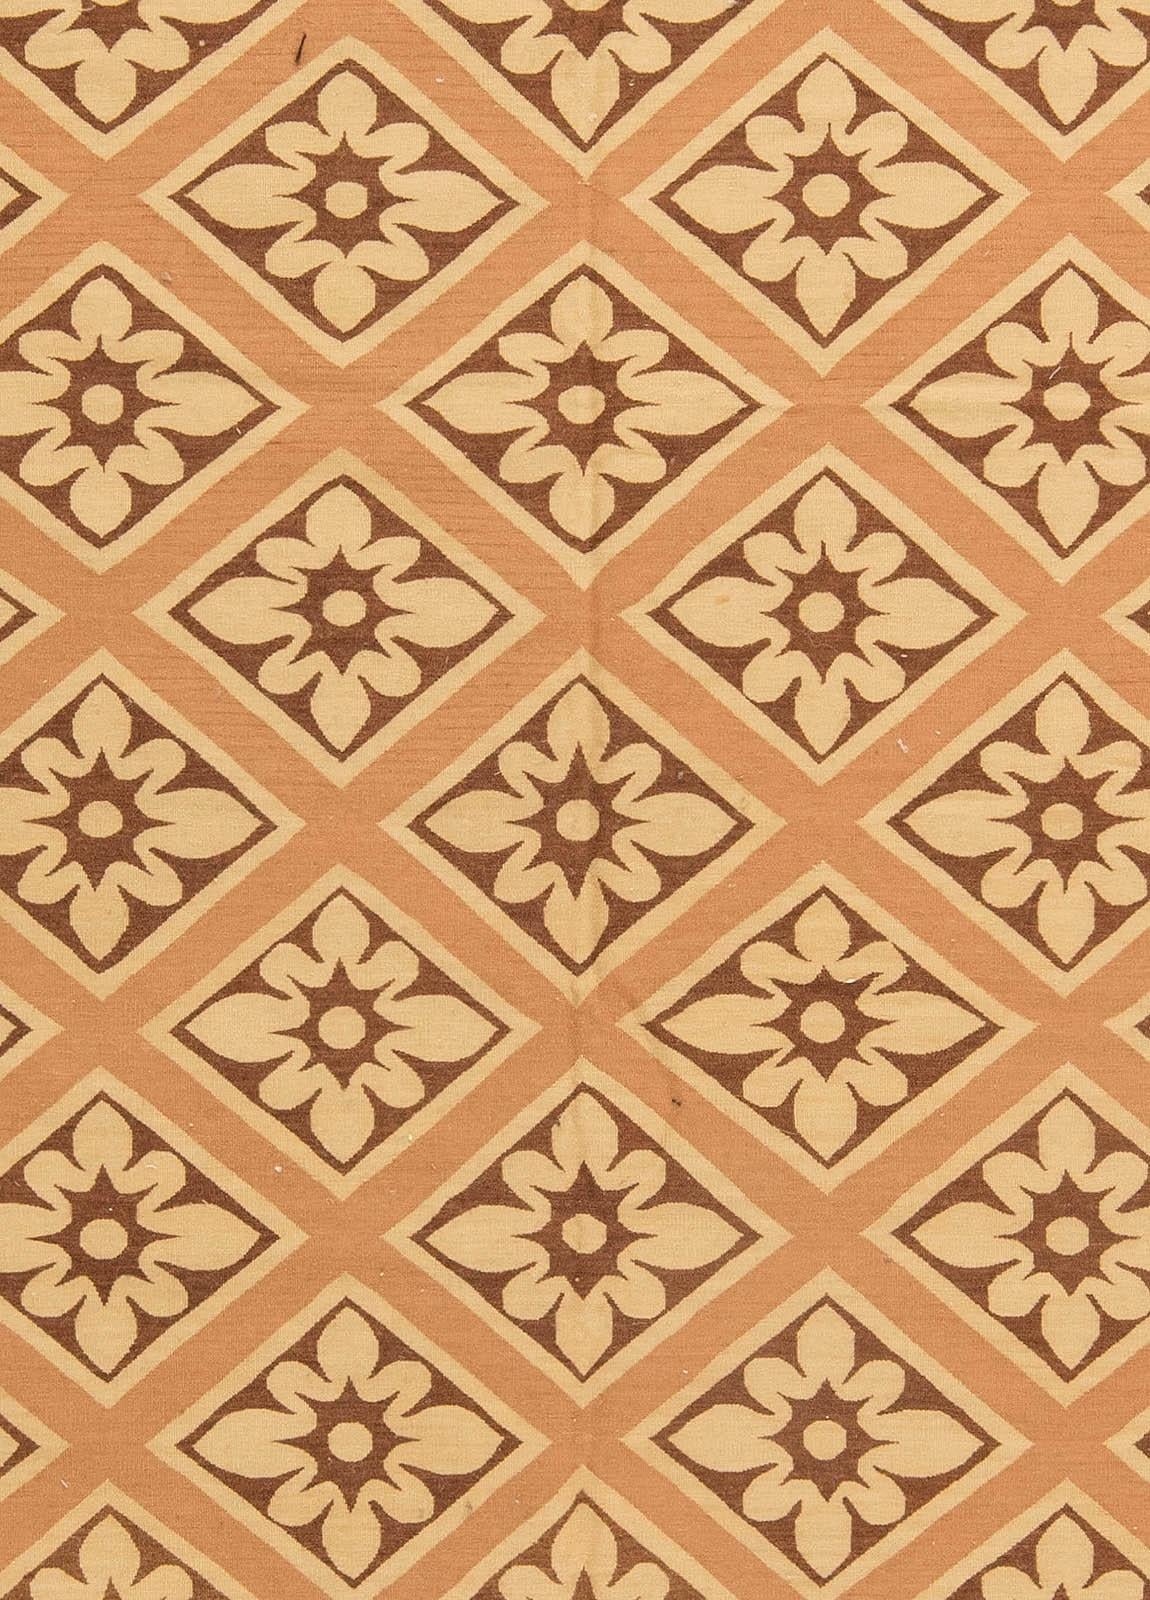 European inspired aubusson rug by Doris Leslie Blau.
Size: 9.0